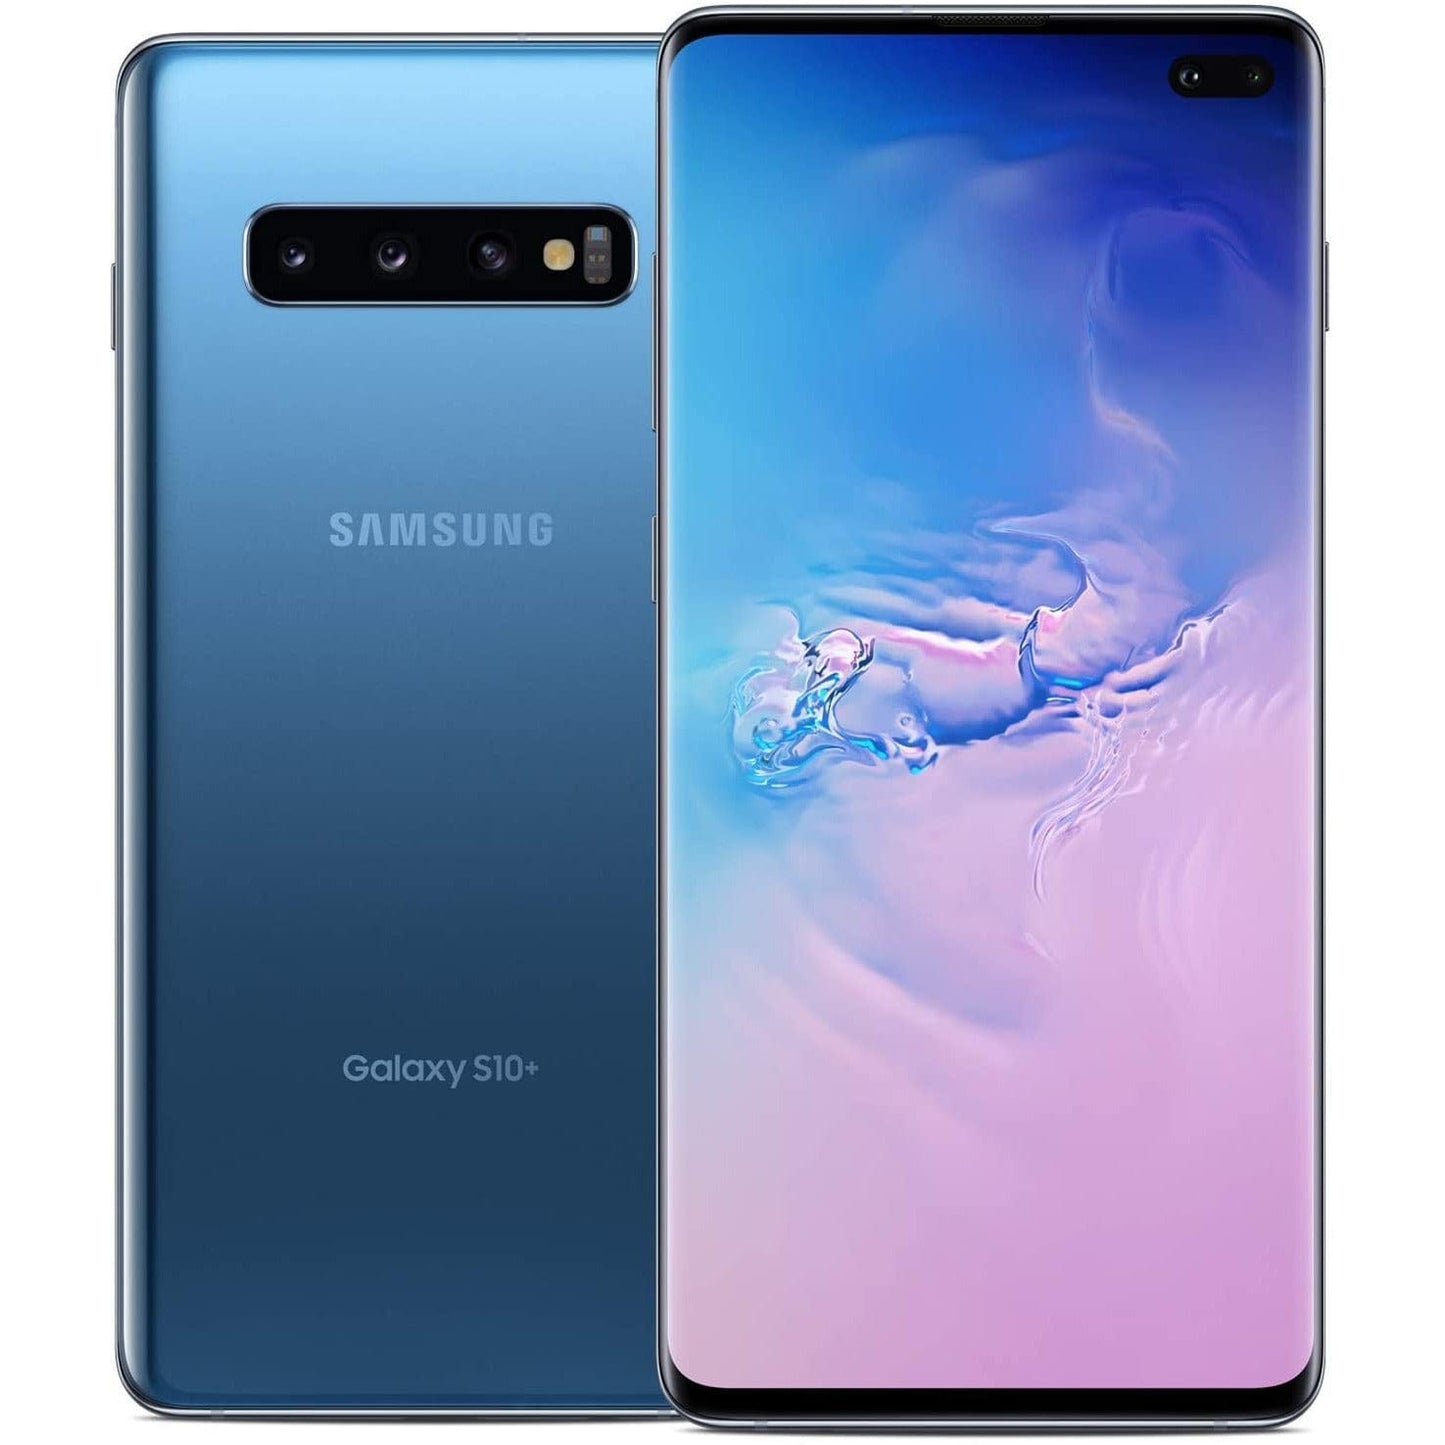 Samsung Galaxy S10+ - 128 GB - Prism Blue - AT&T - GSM